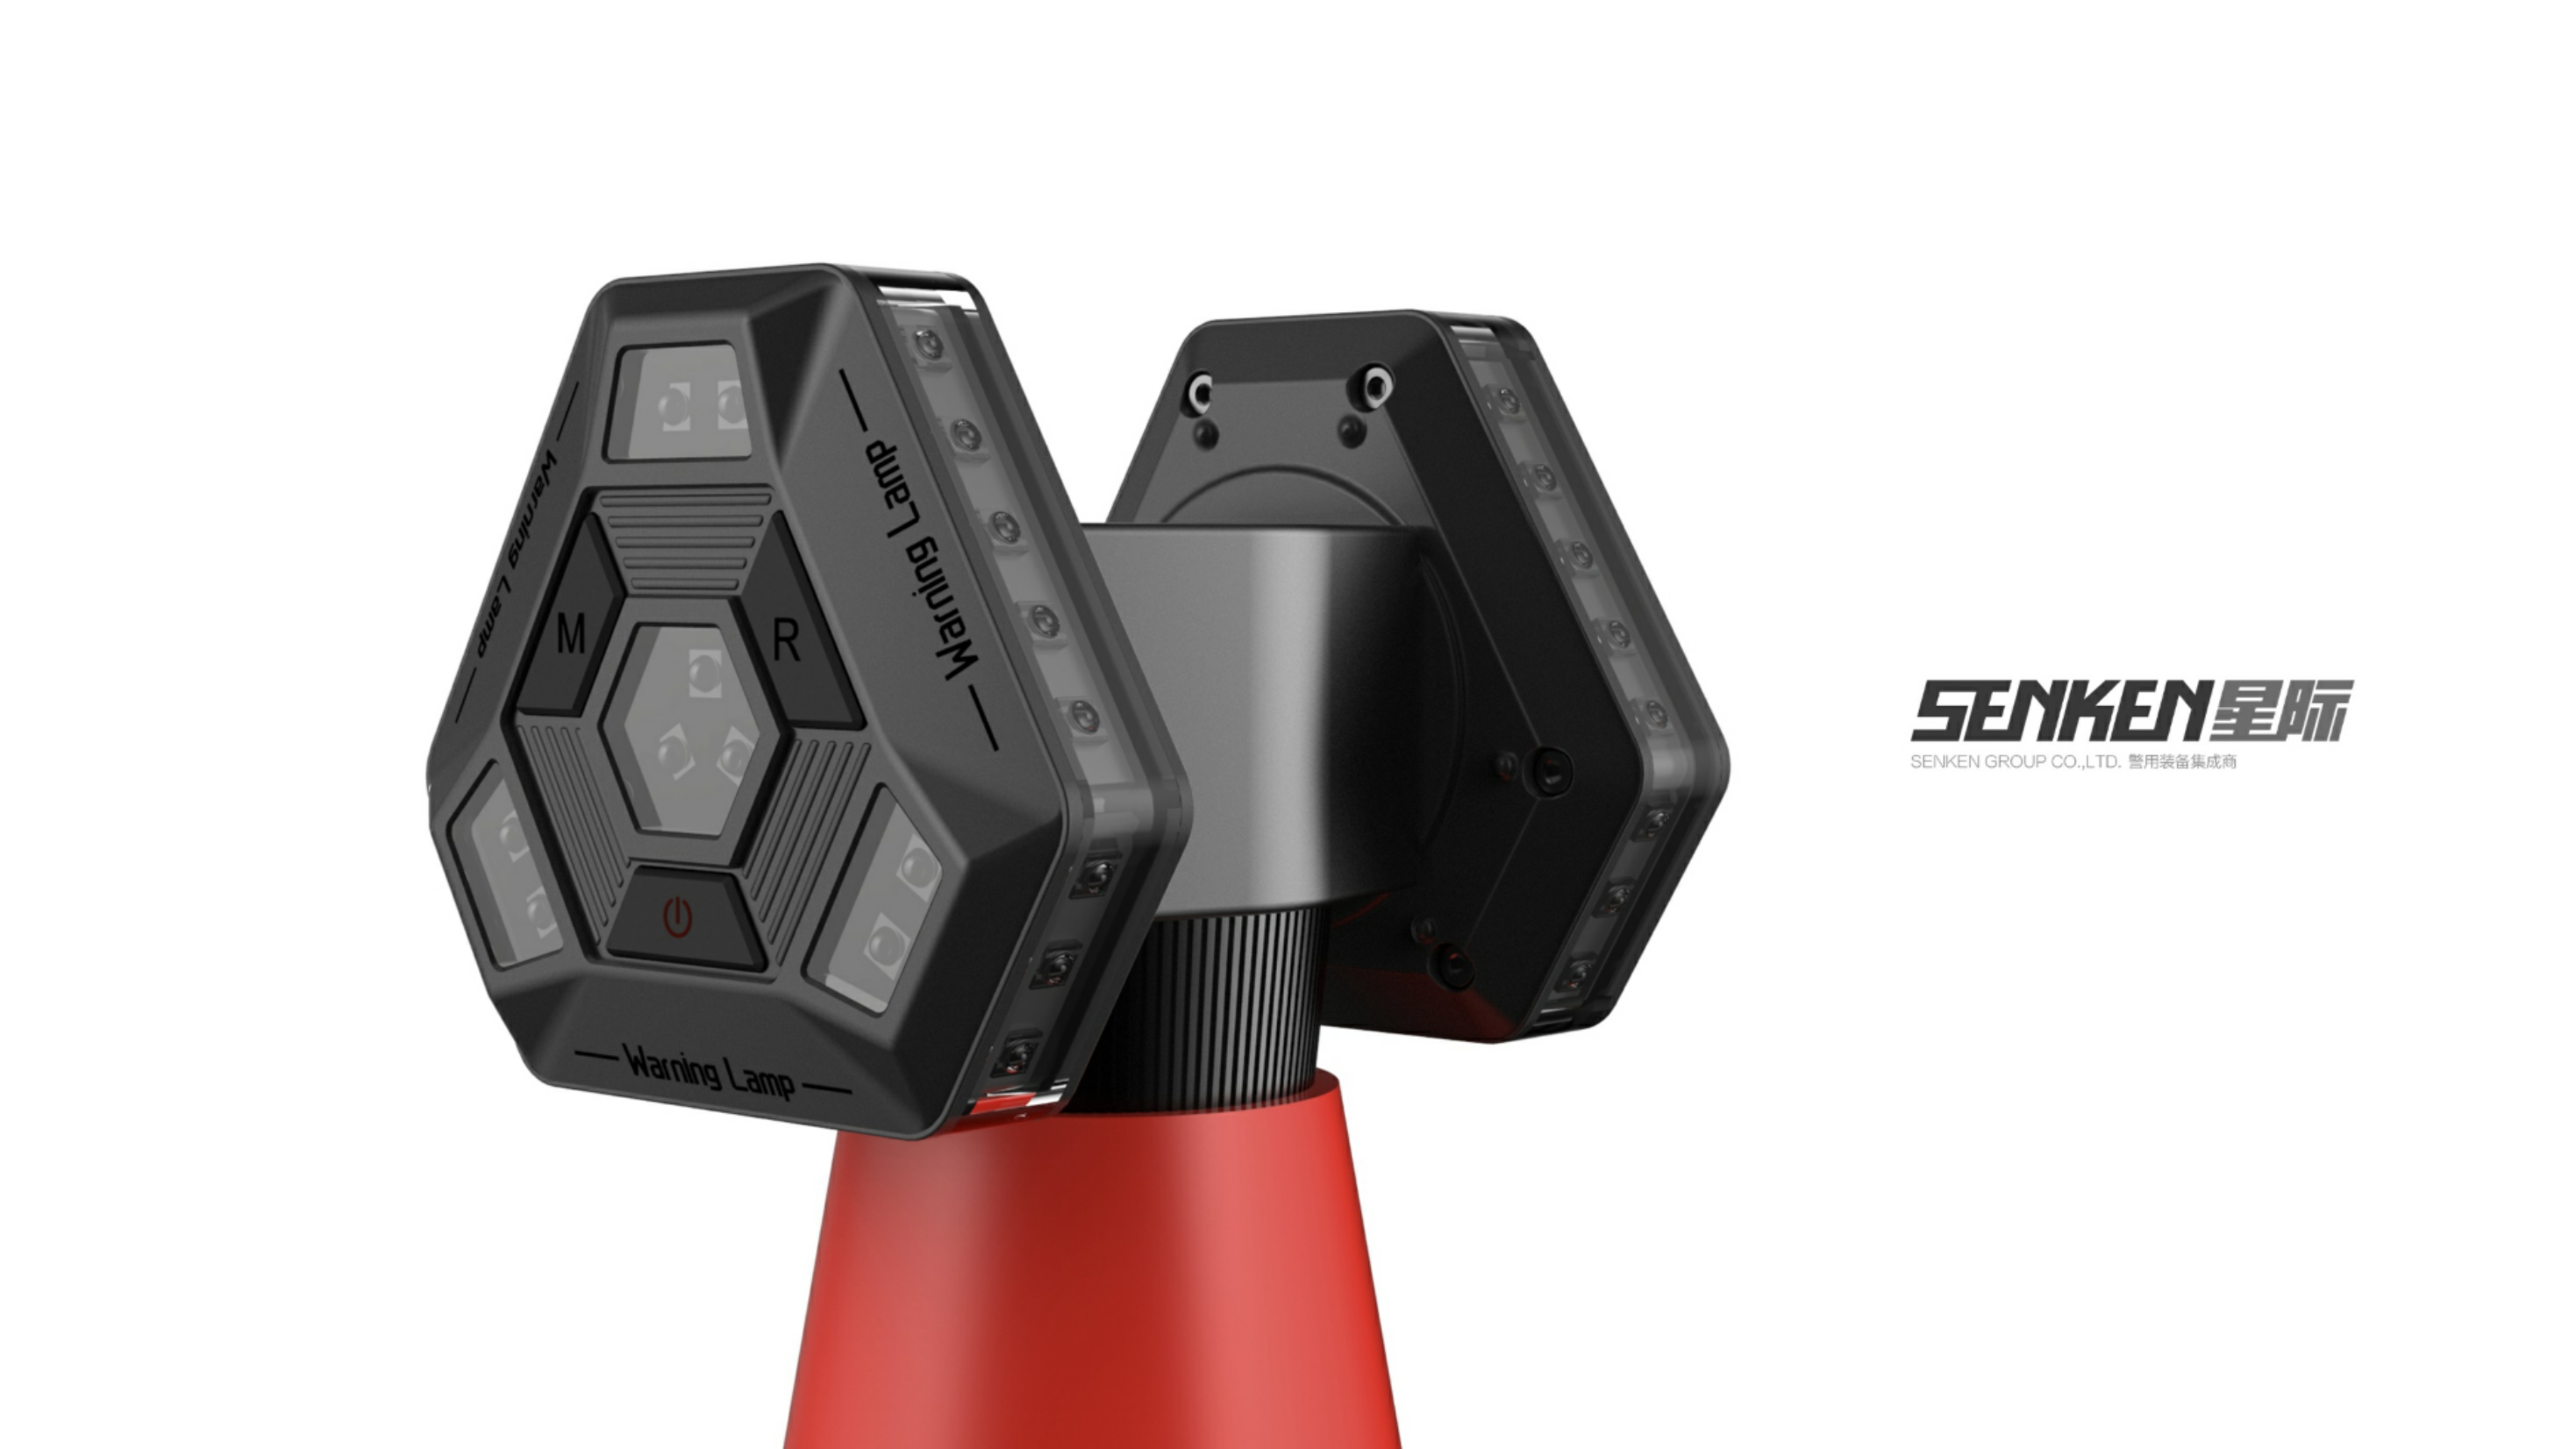 SENKEN Visible Mini Portable Rechargeable Police 360 Degree LED Magnetic Warning light